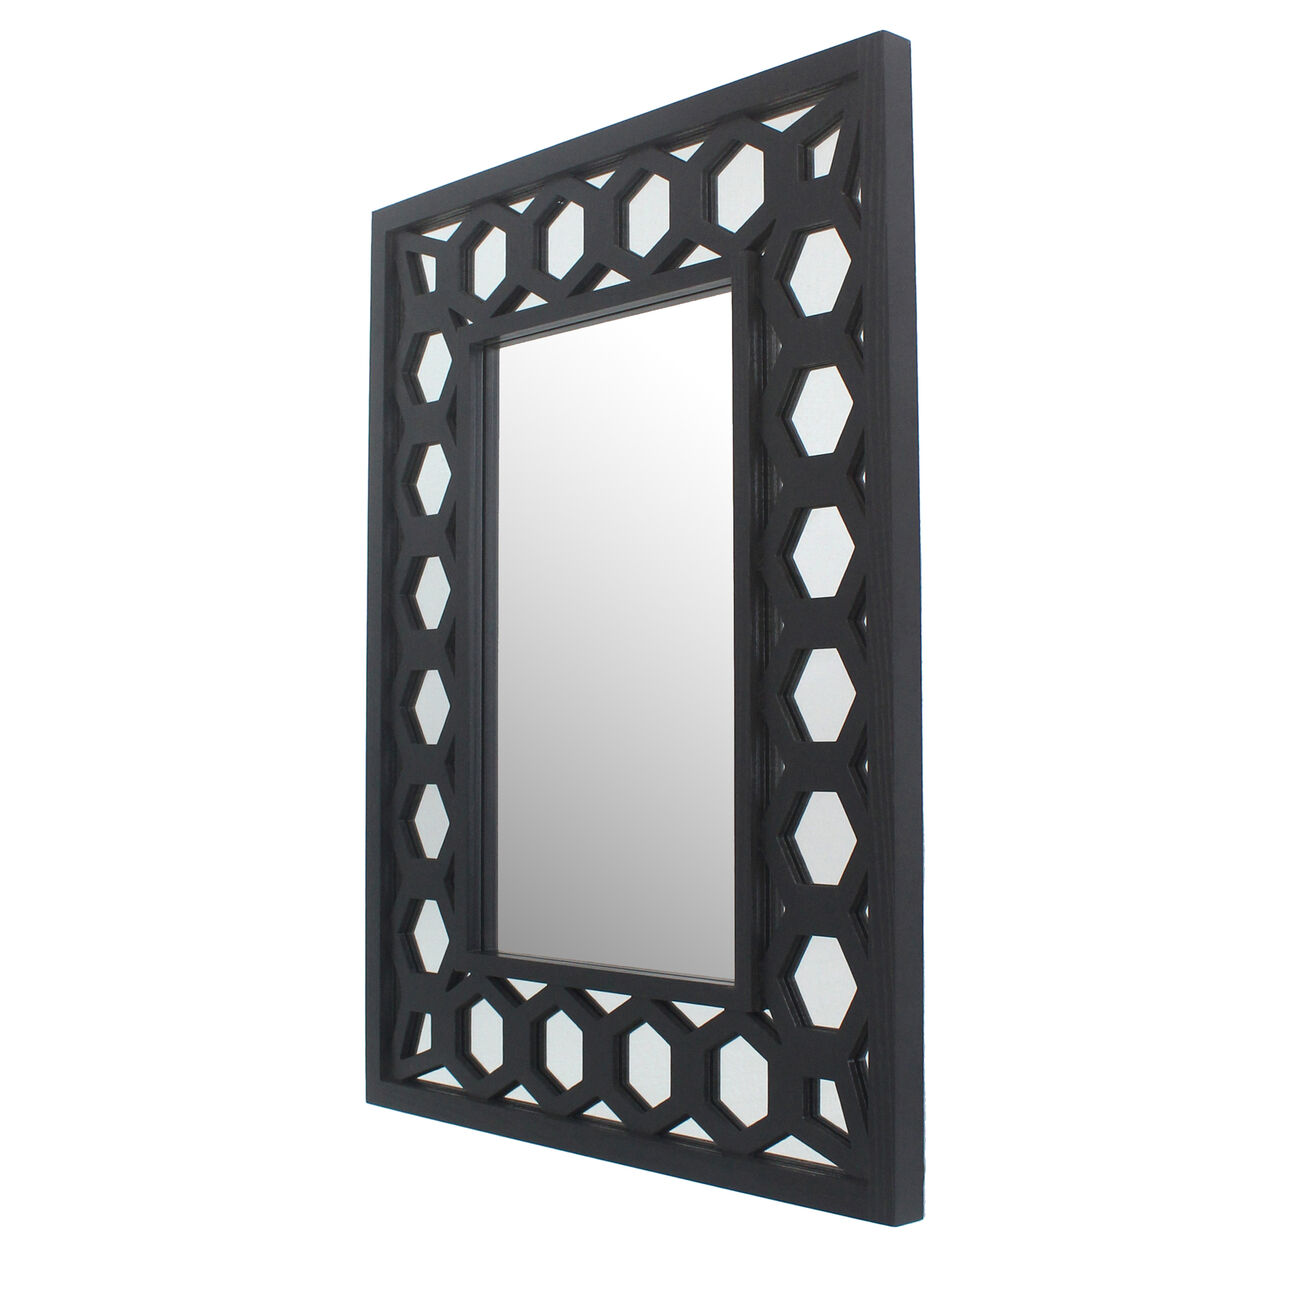 Rectangular Wooden Dressing Mirror with Lattice Pattern Design, Black